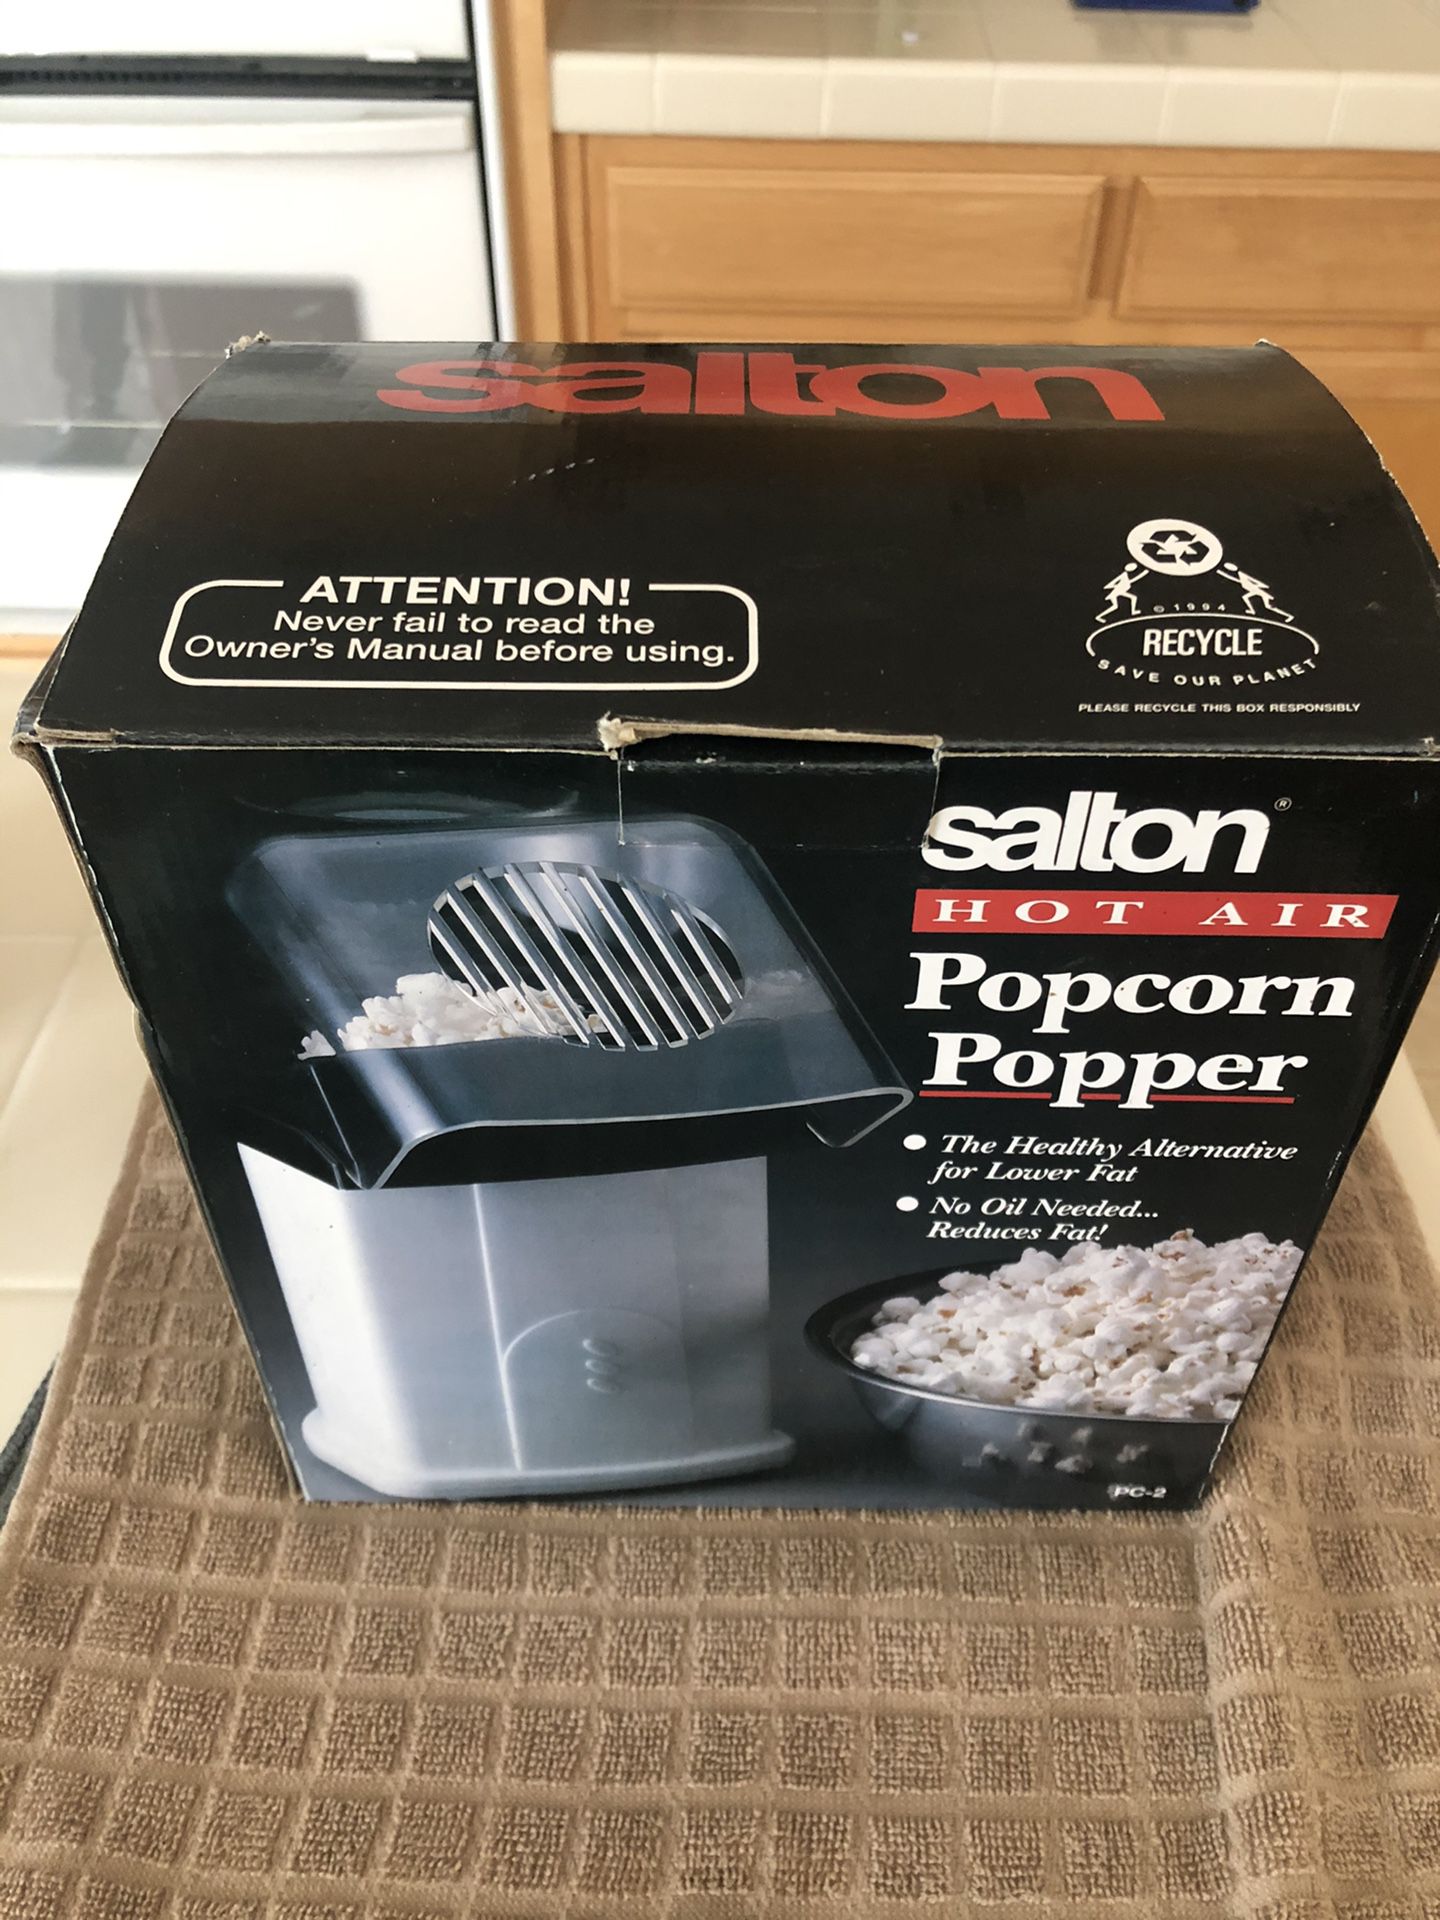 Salton popcorn popper